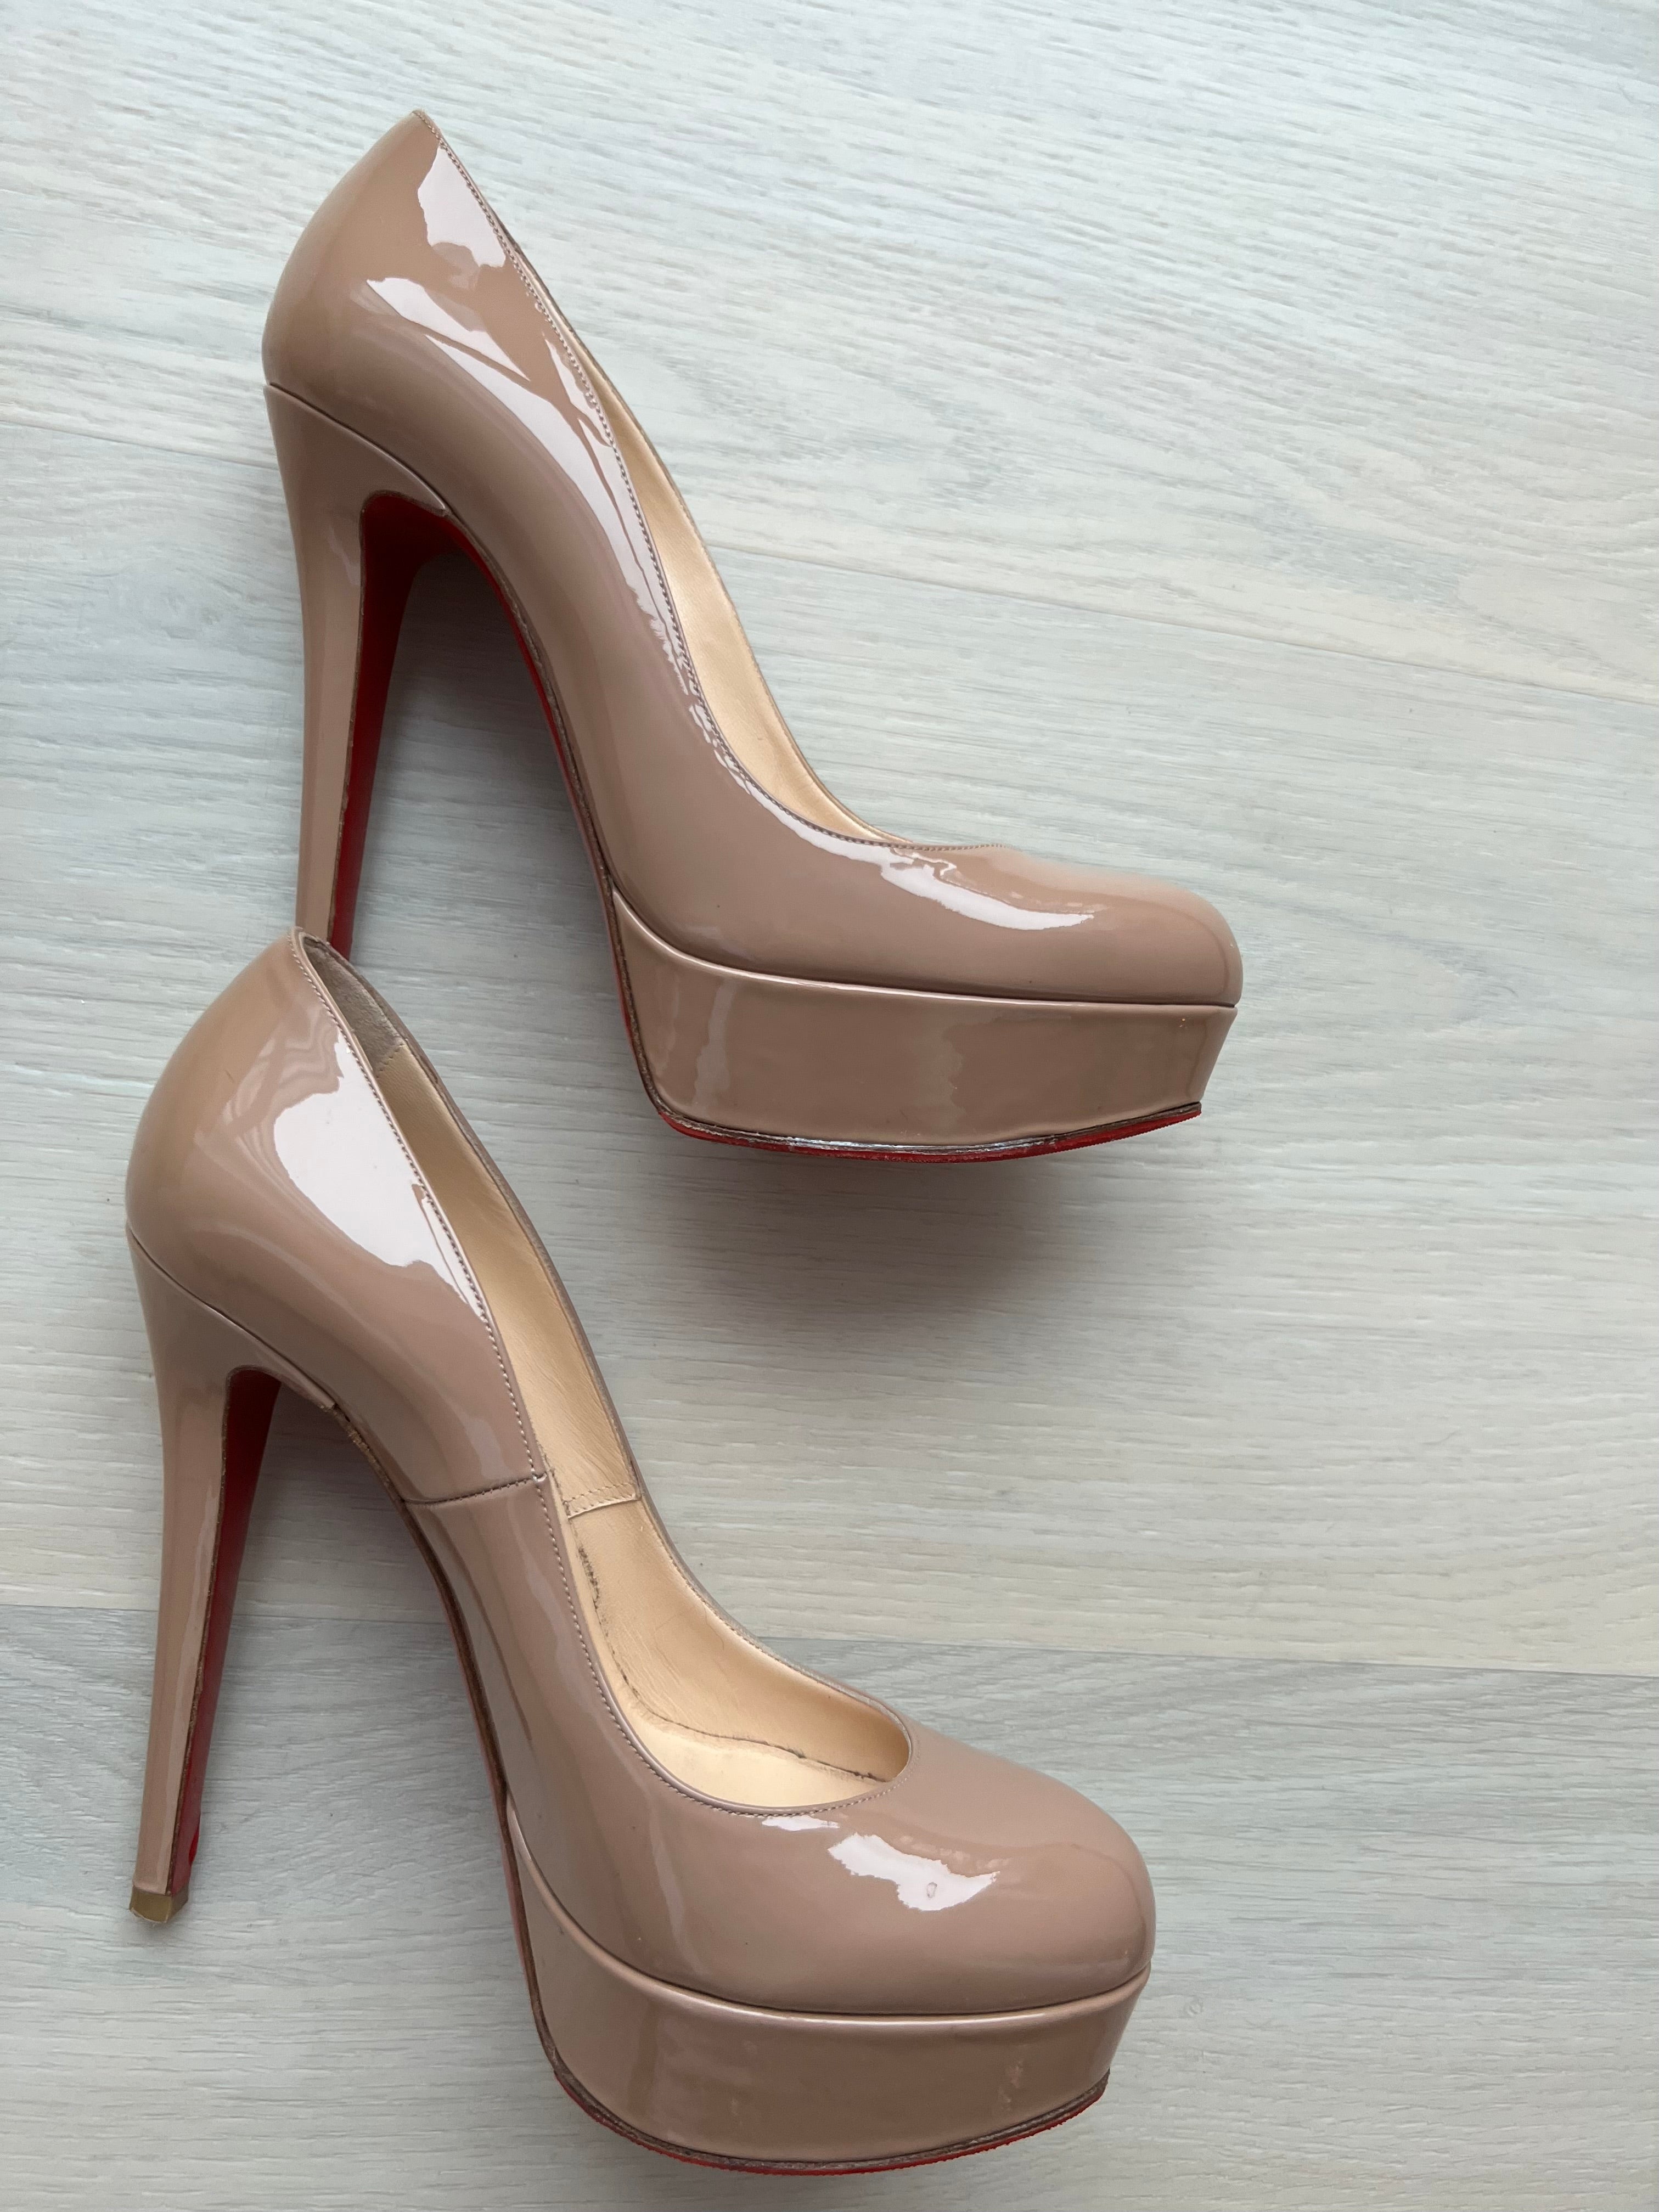 Louis Vuitton, Shoes, Christian Louboutin Nude Patent Bianca Heels